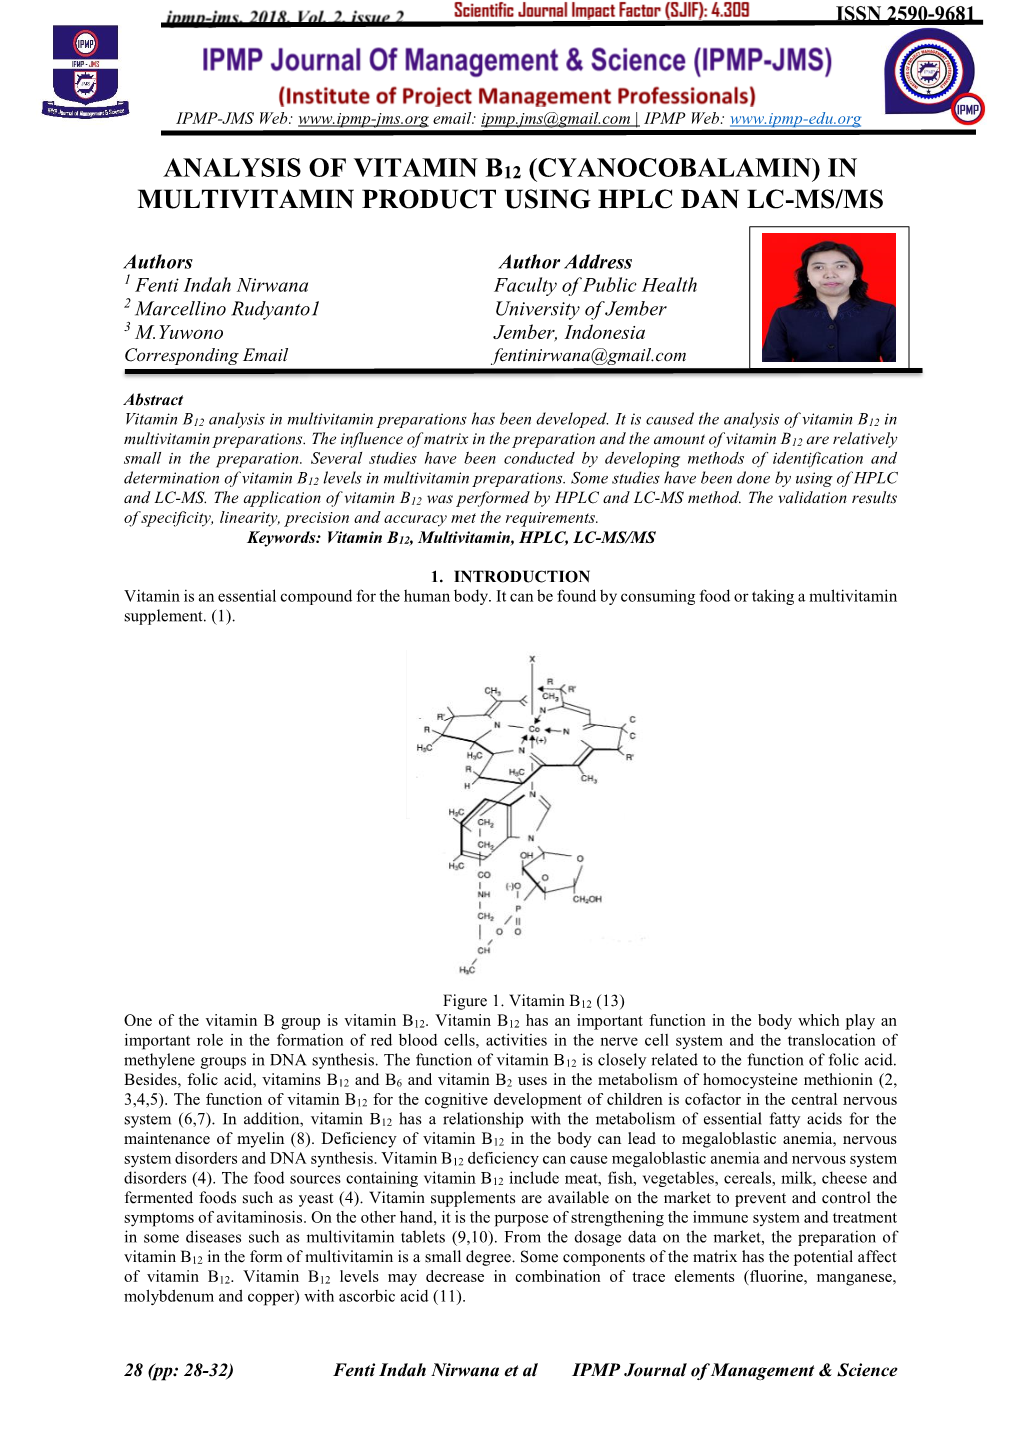 Analysis of Vitamin B12 (Cyanocobalamin) in Multivitamin Product Using Hplc Dan Lc-Ms/Ms